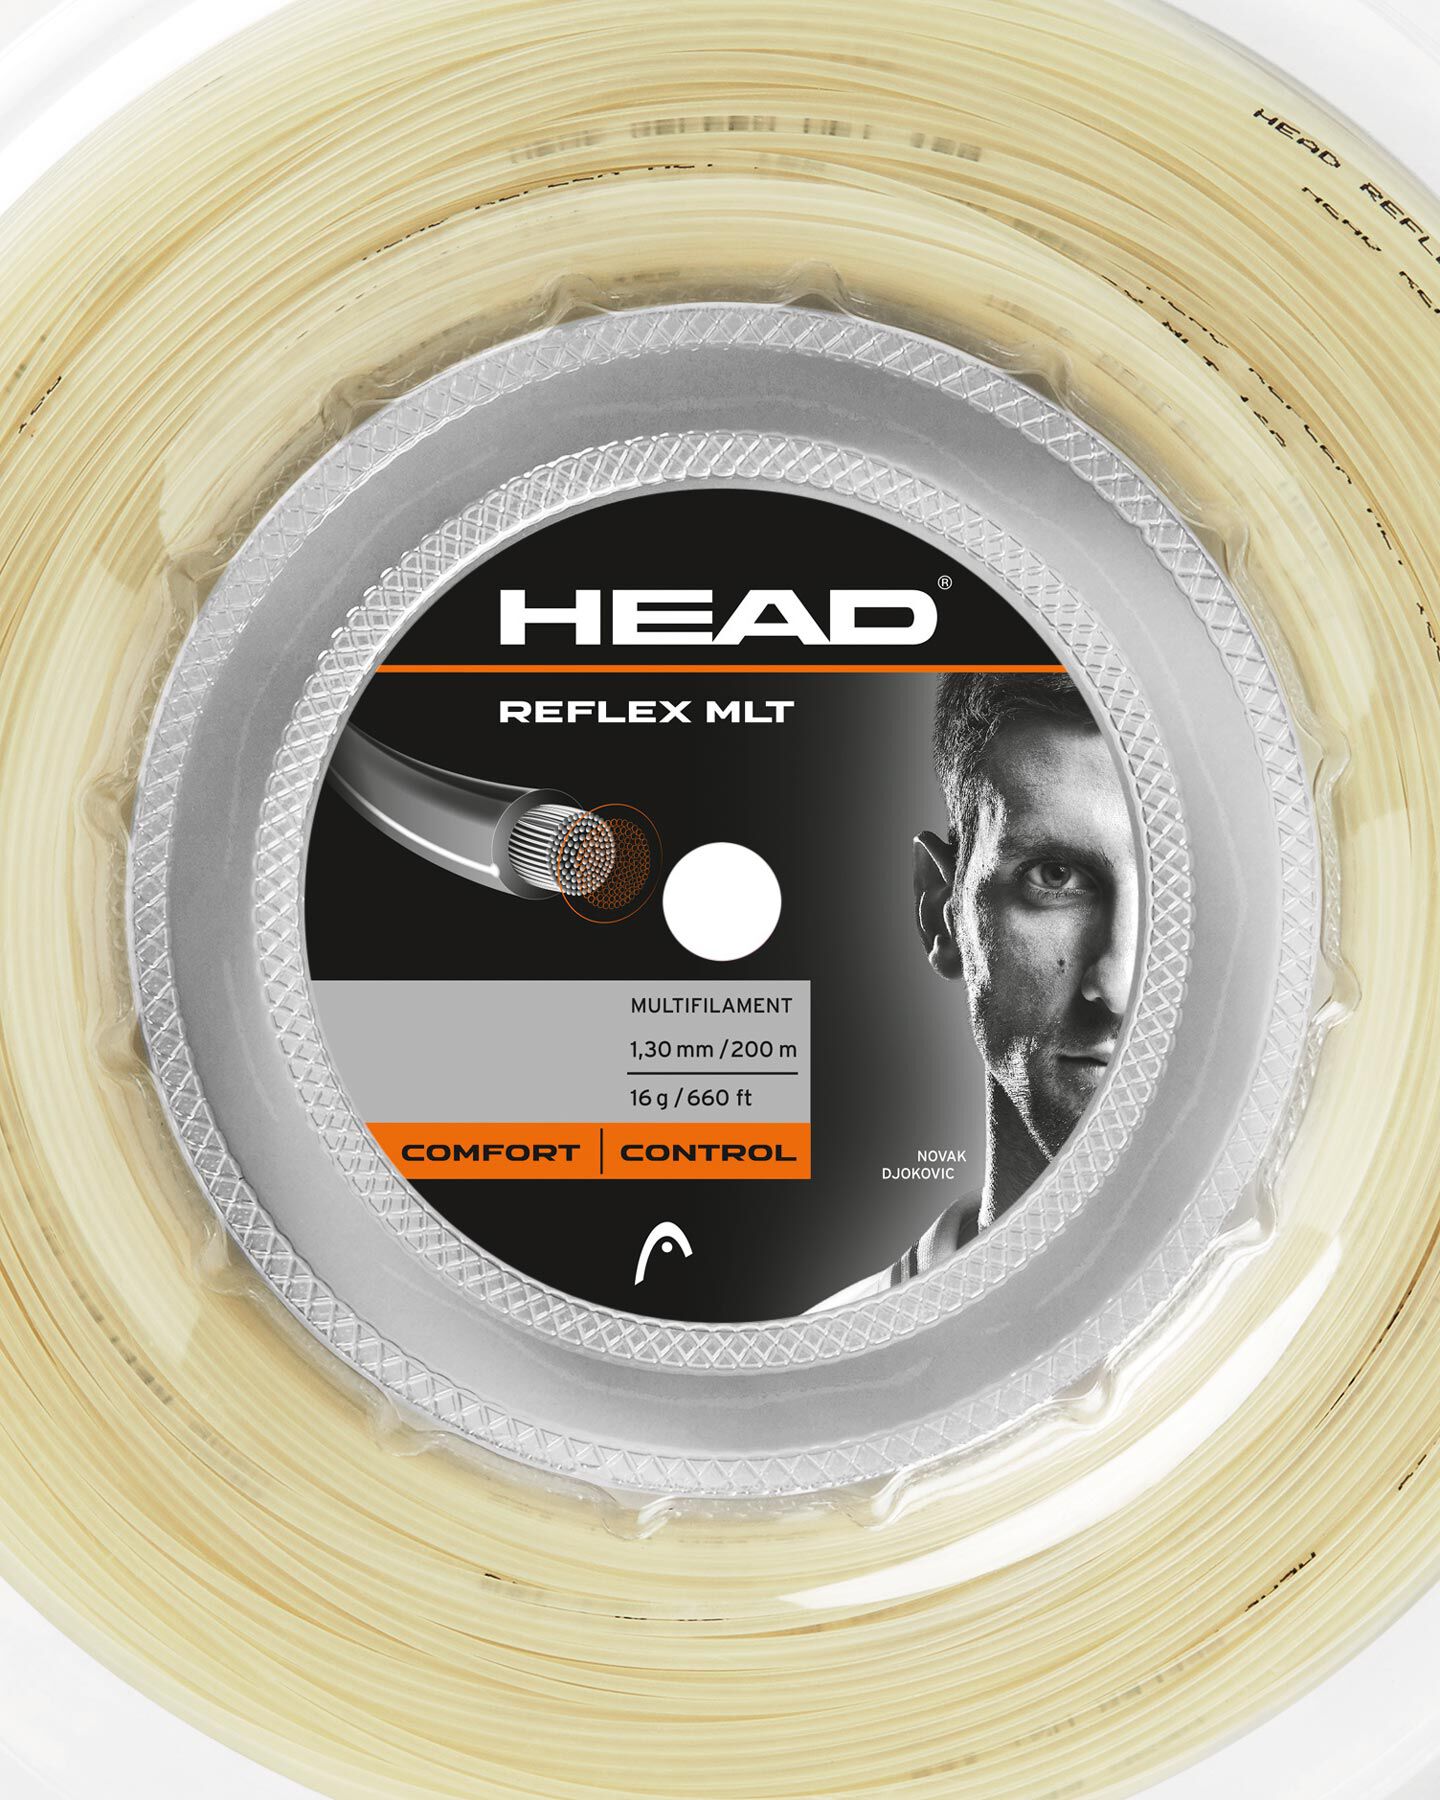  Corde tennis HEAD REFLEX MLT S4002998|NAT|UNI scatto 1